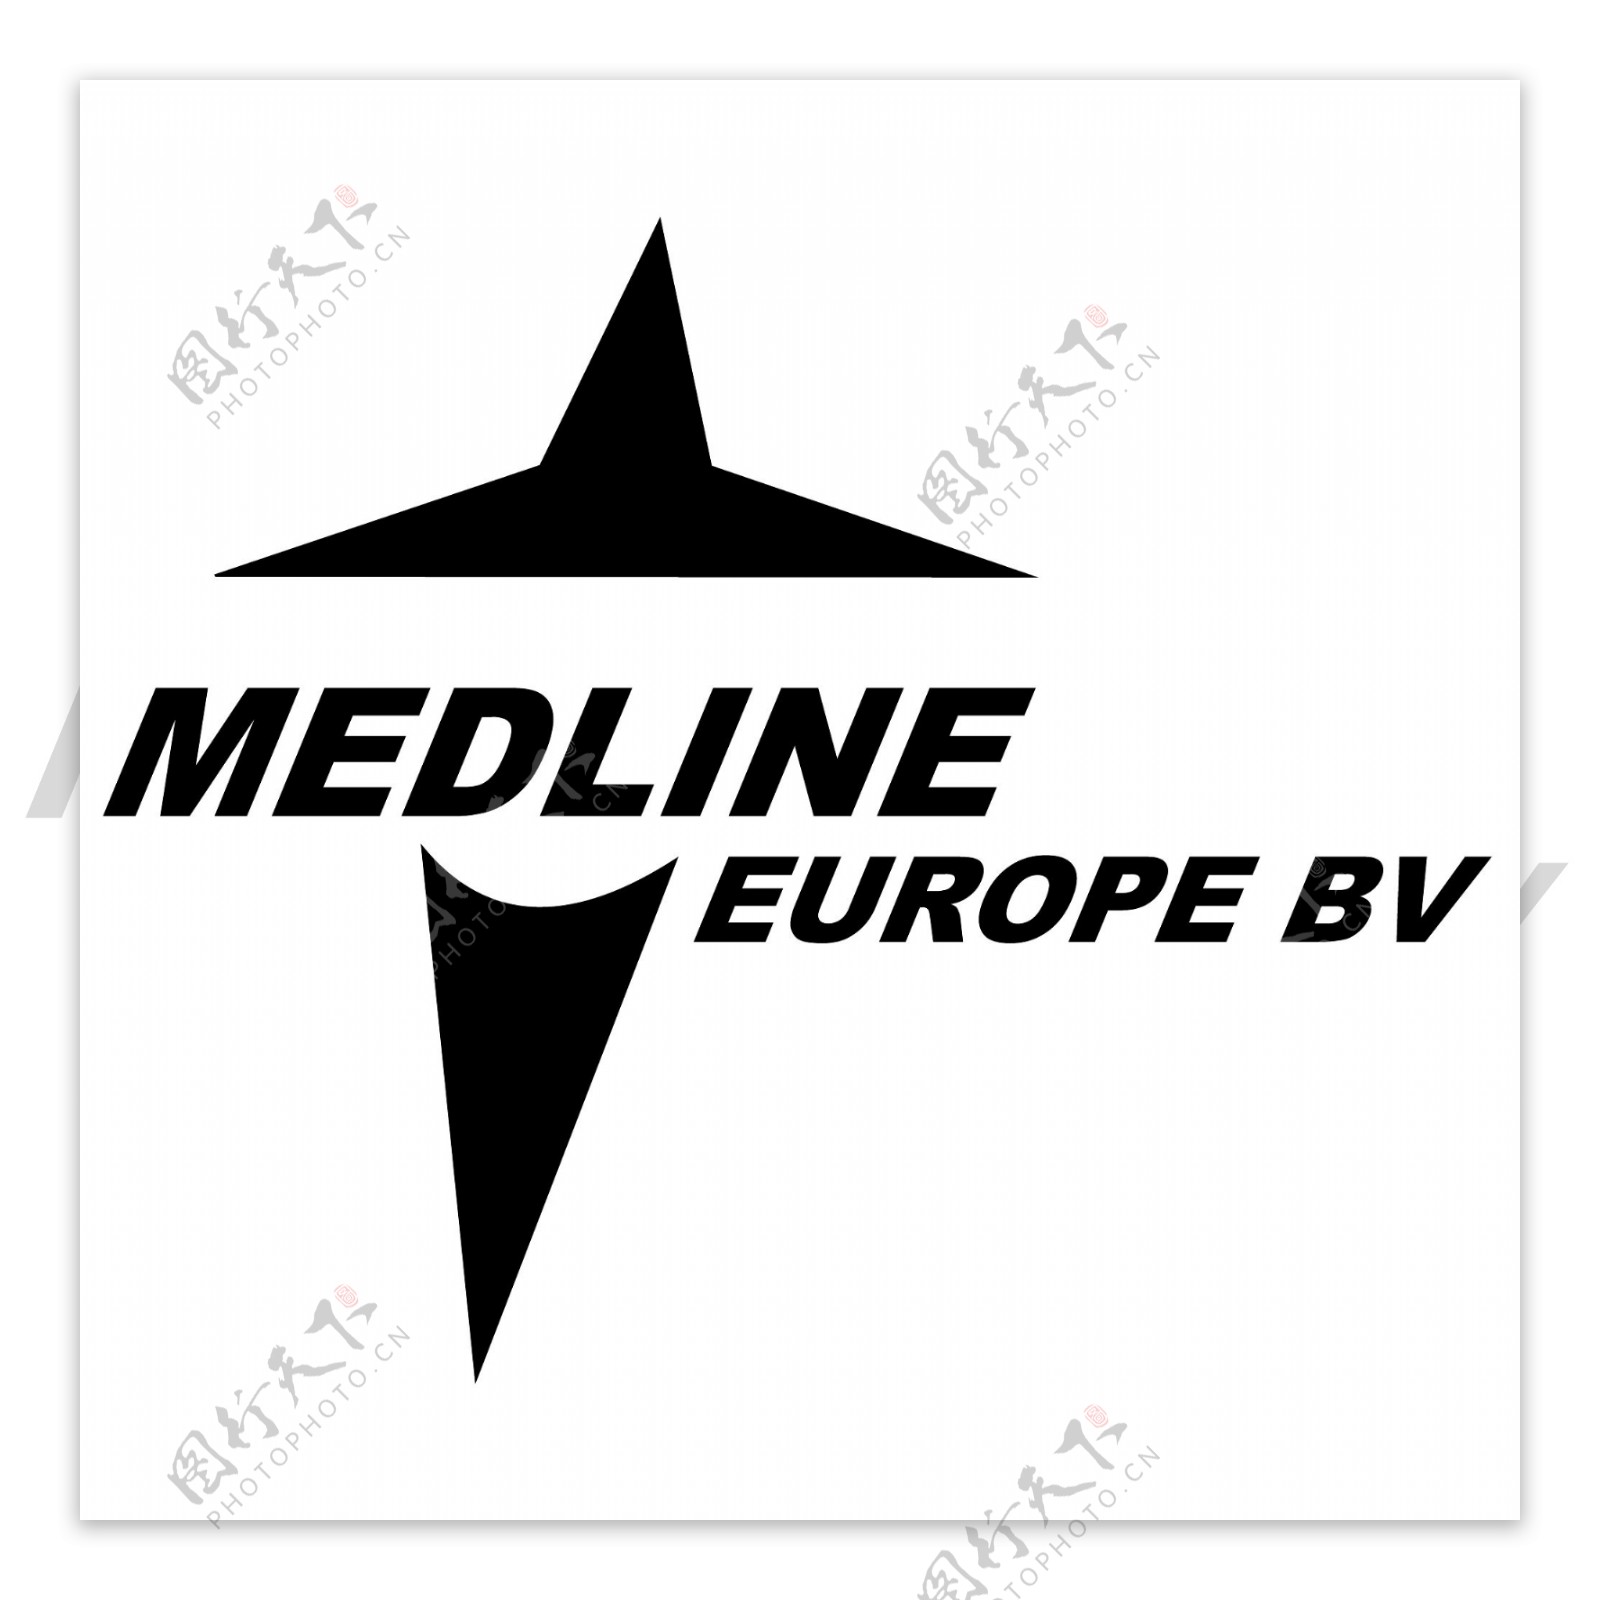 MEDLINE欧洲有限公司